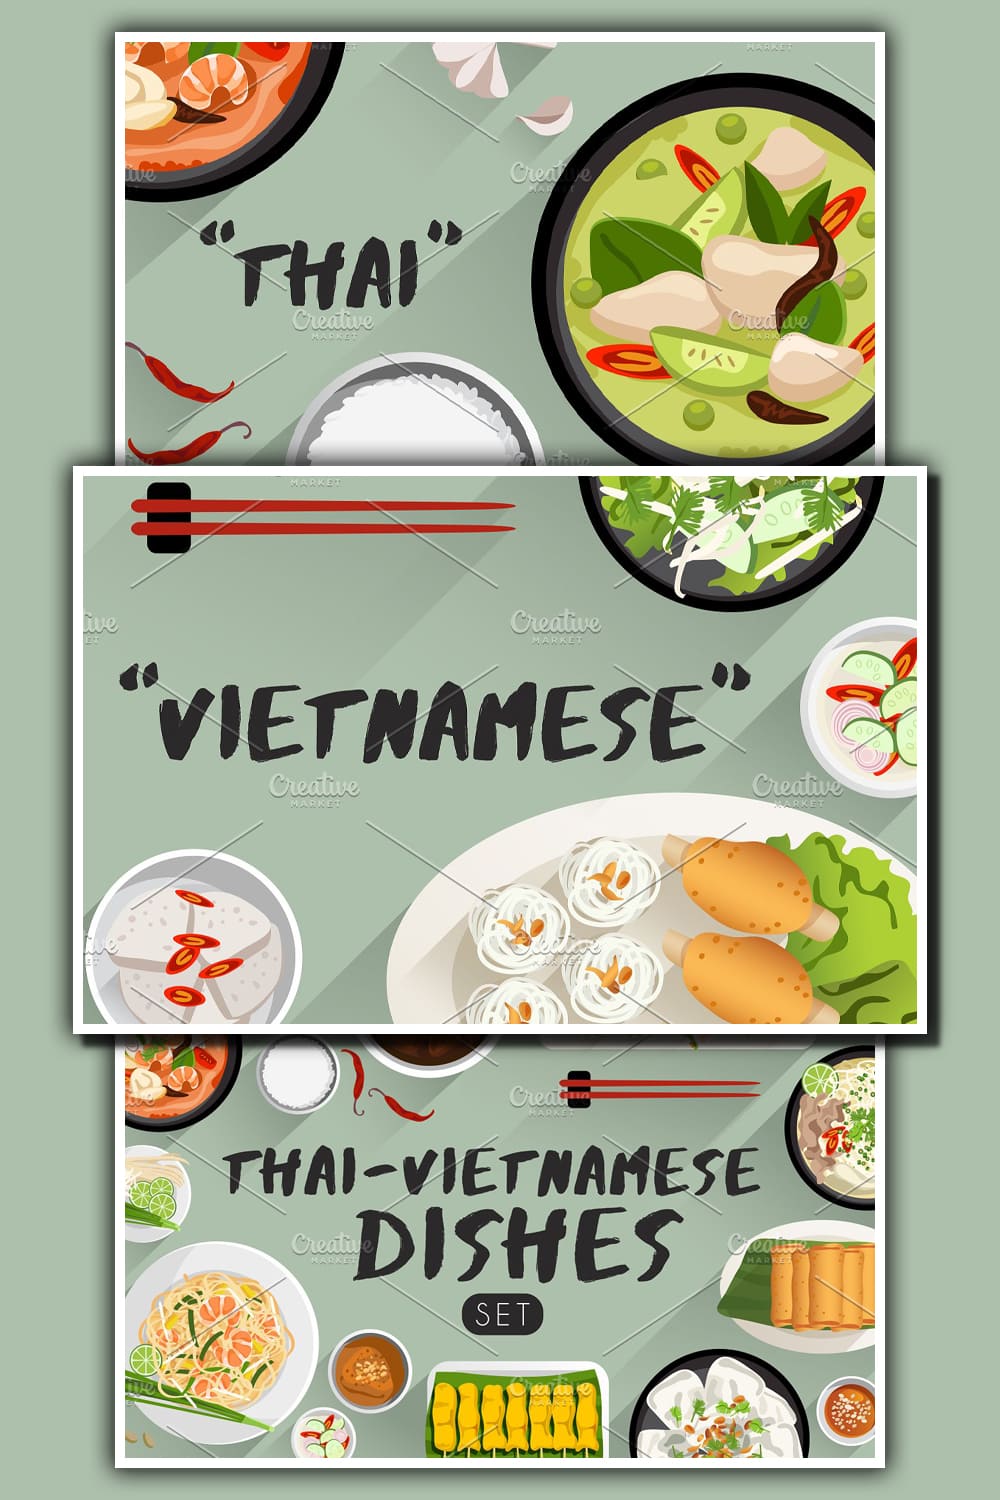 595797 big set of thaivietnamese cuisine pinterest 1000 1500